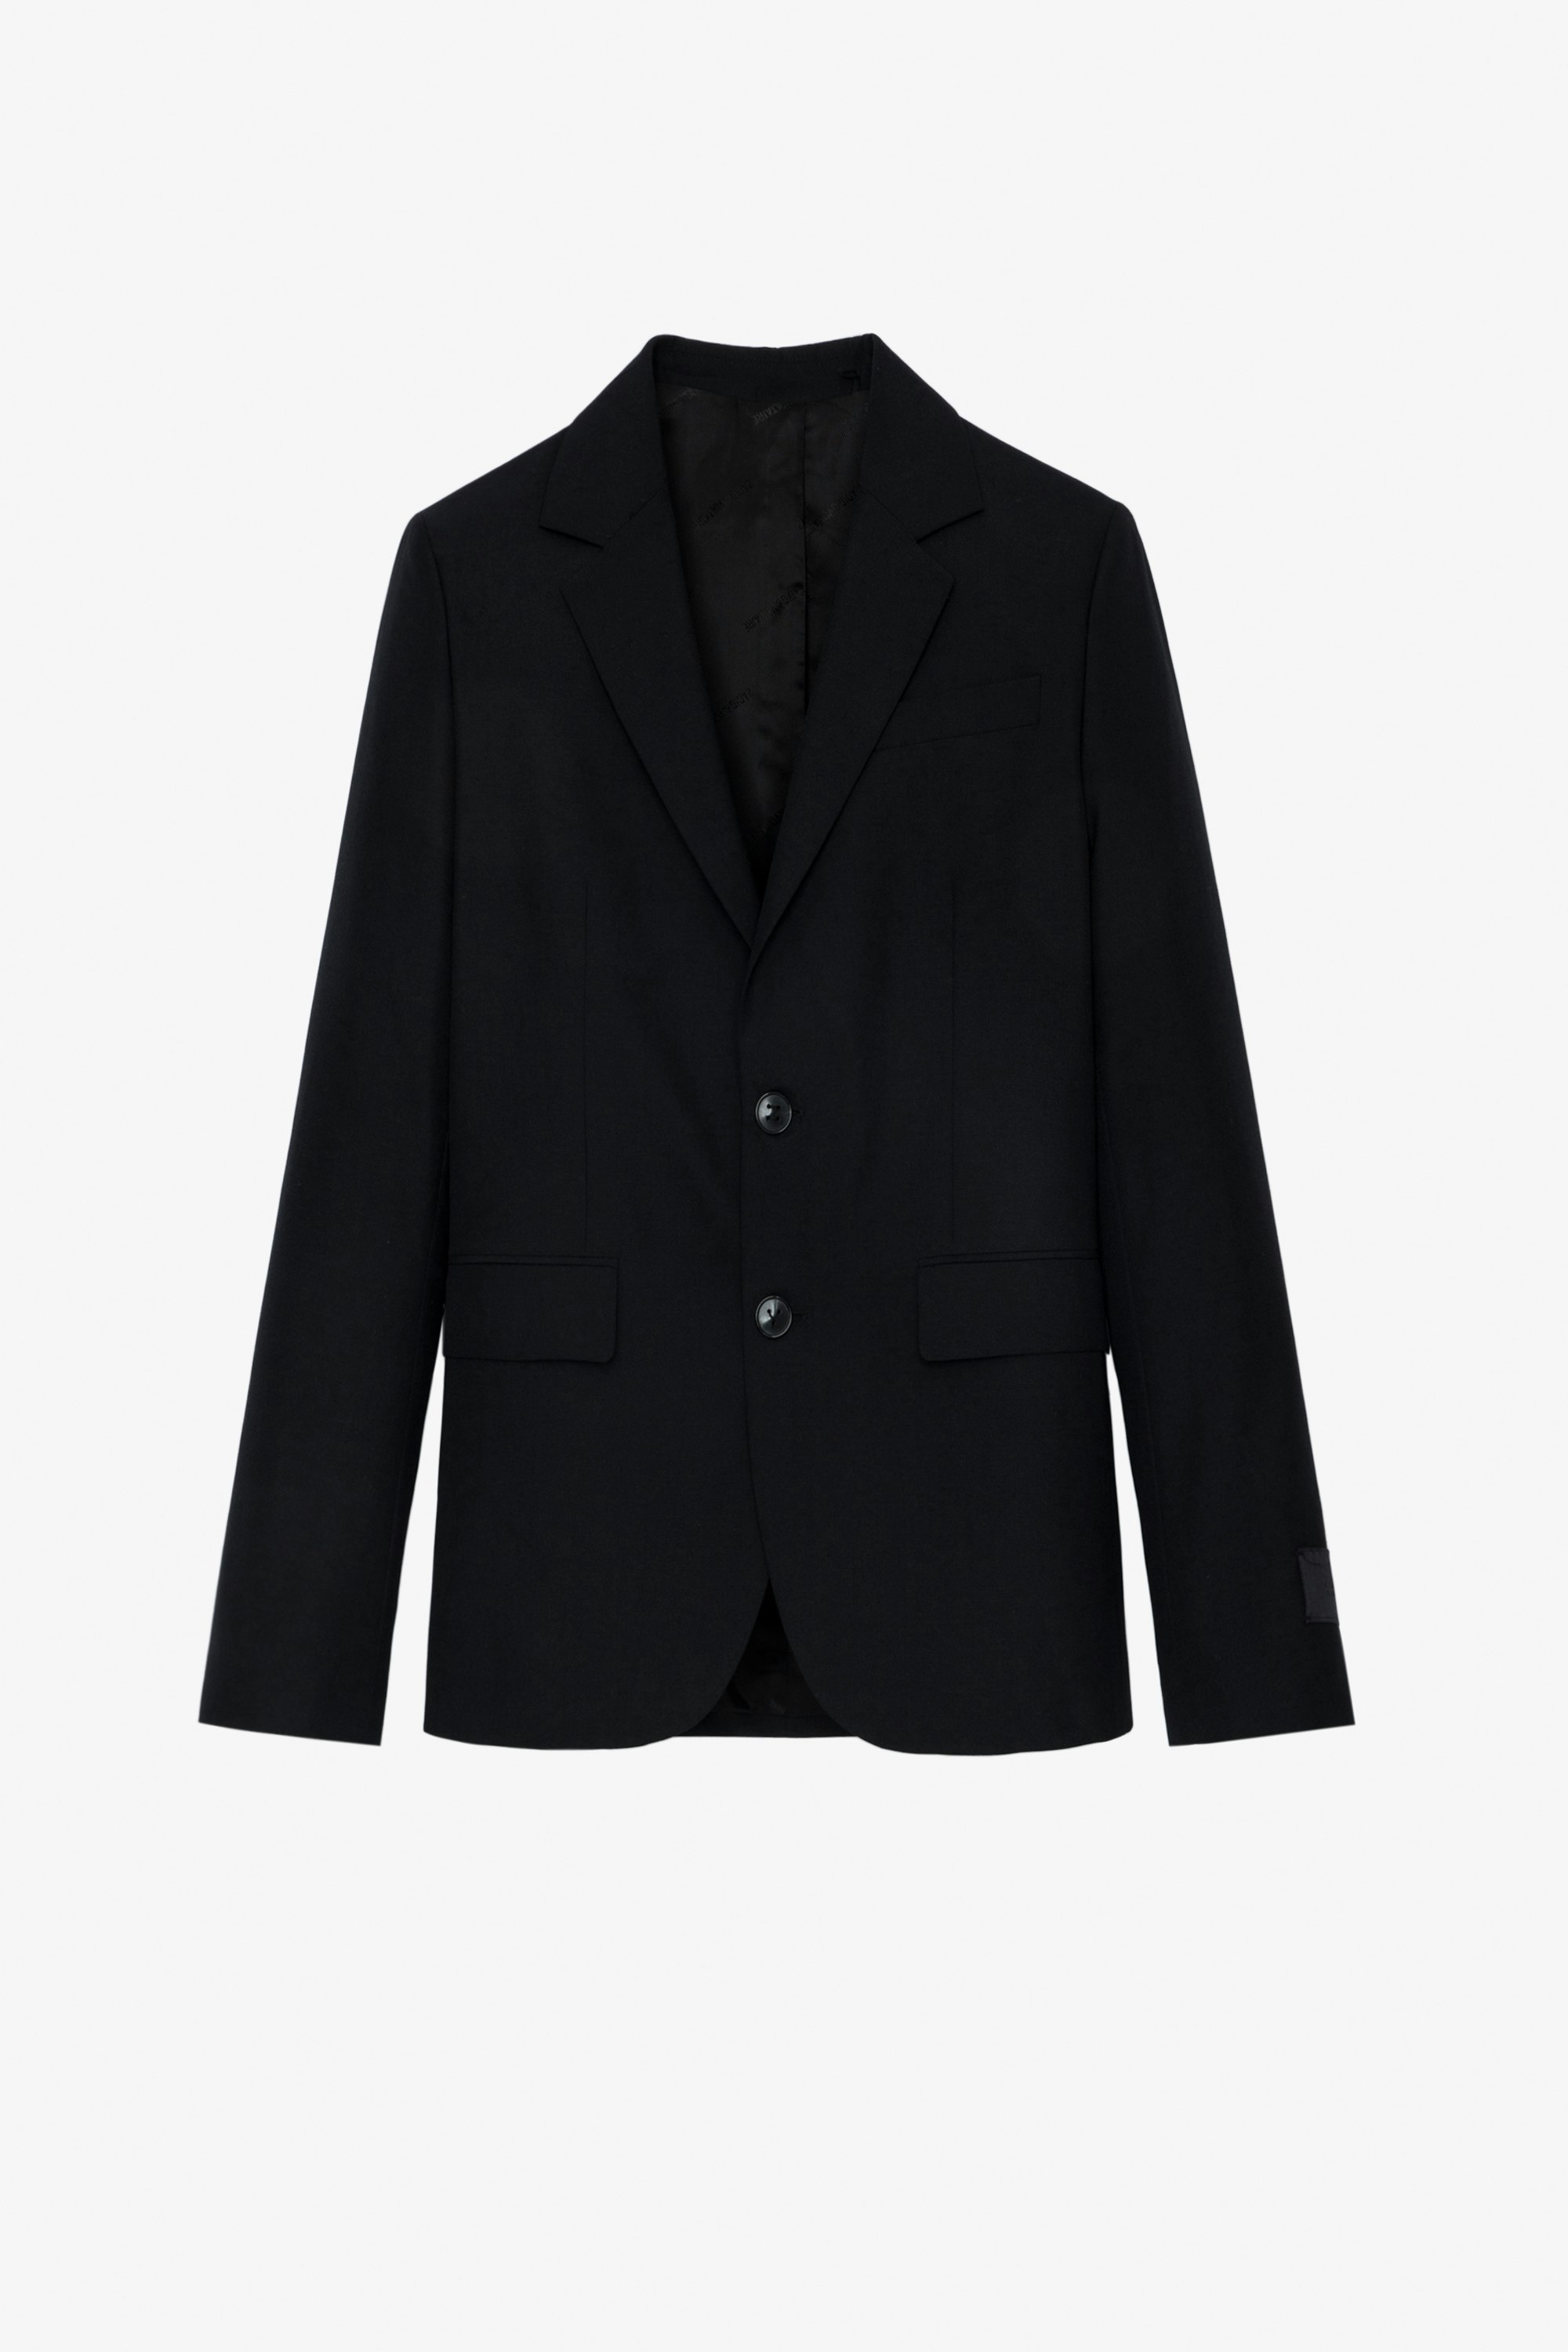 Viks Blazer Women’s black suit jacket with pockets